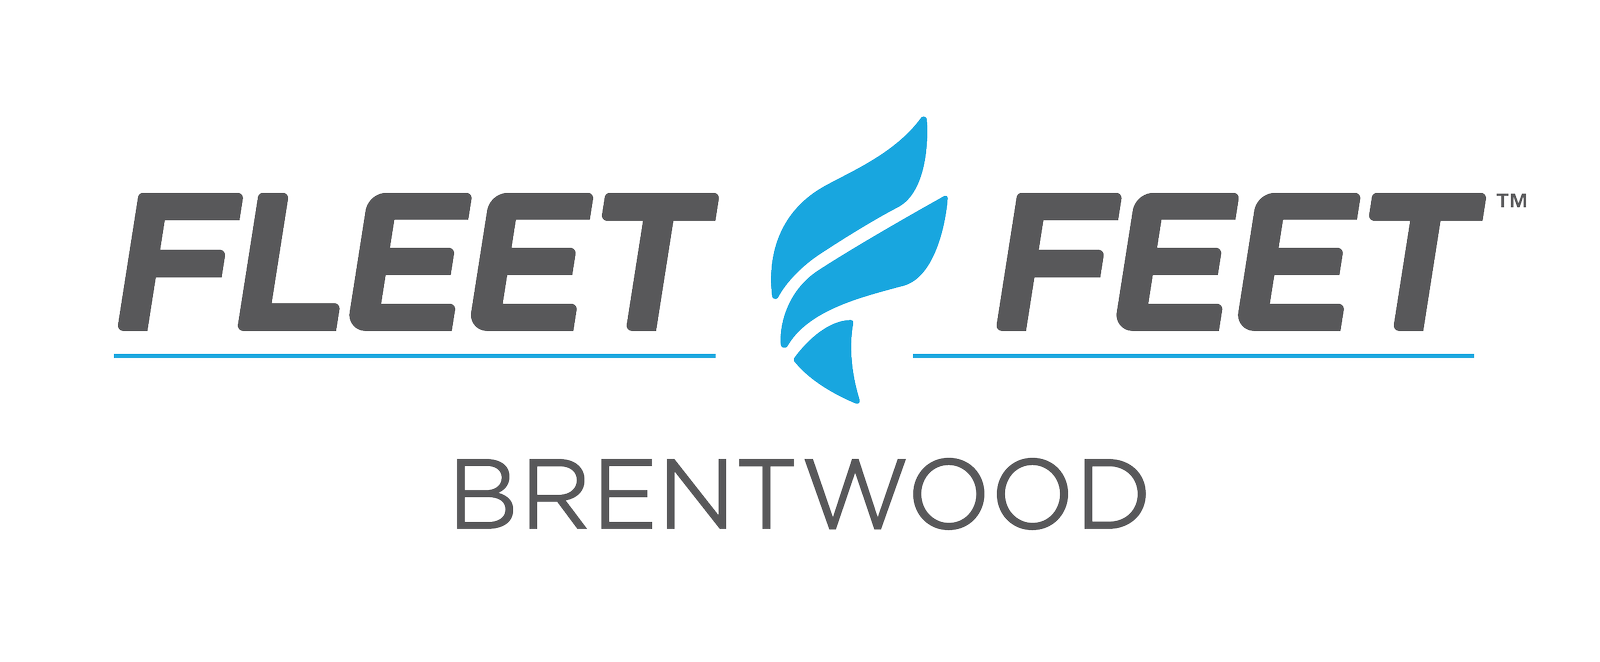 Fleet Feet Brentwood - Brentwood, CA - Nextdoor